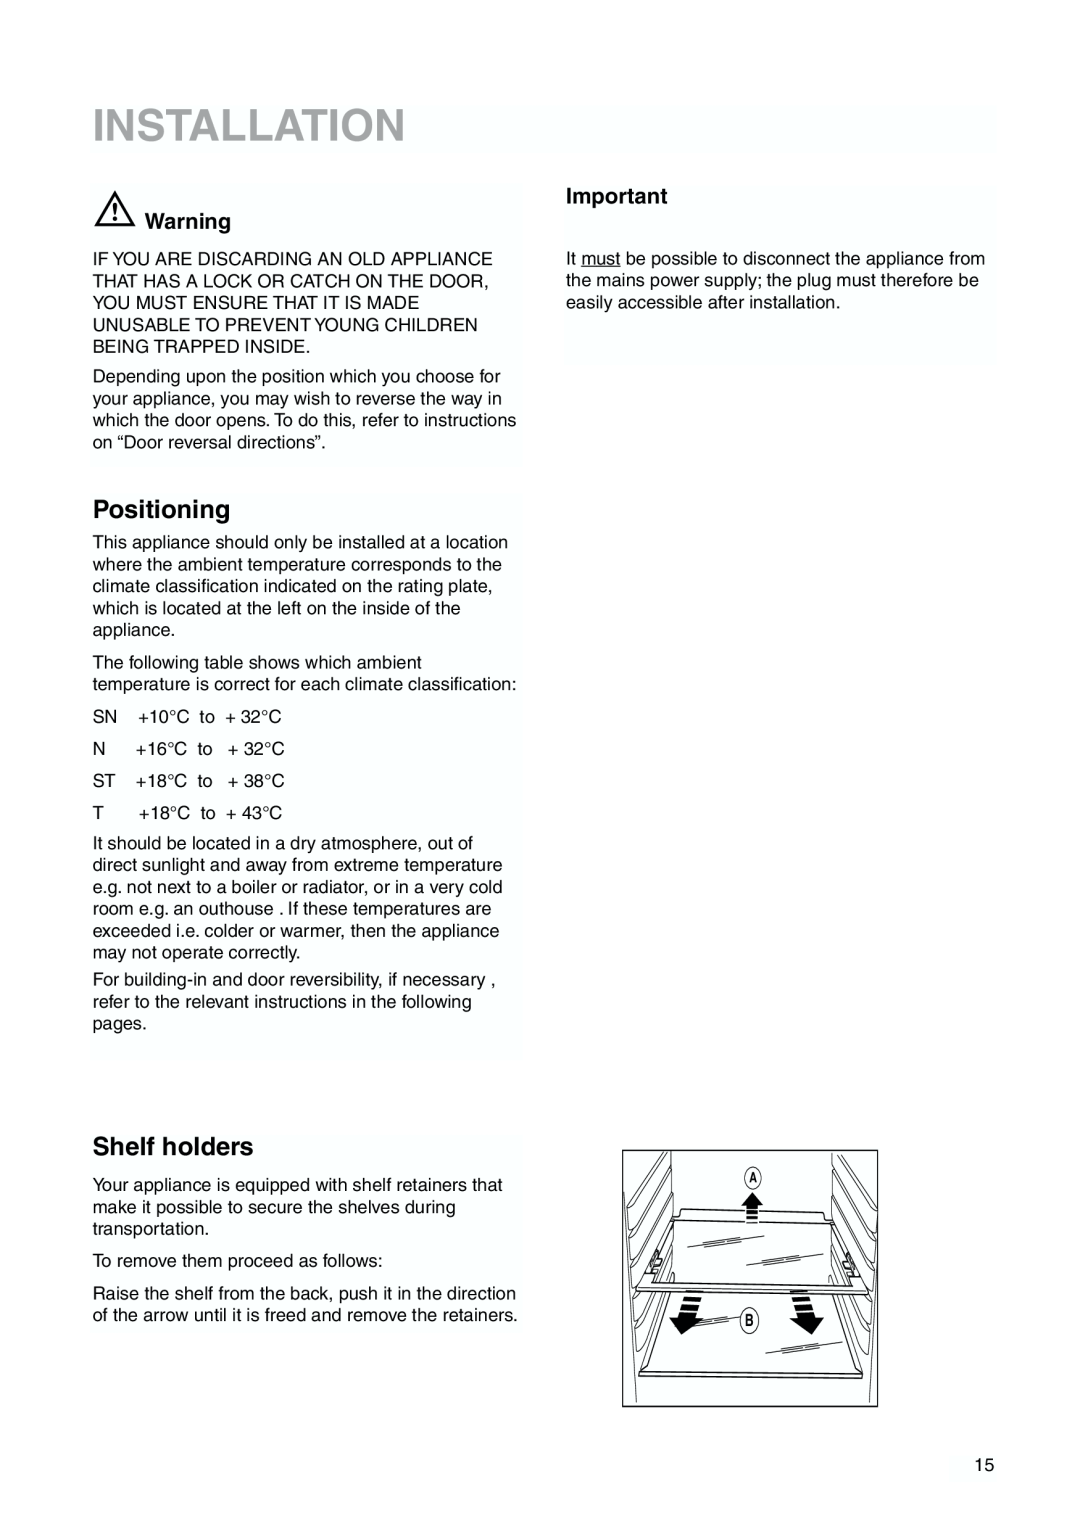 Zanussi ZI 918/9 FFA manual Installation, Positioning, Shelf holders 